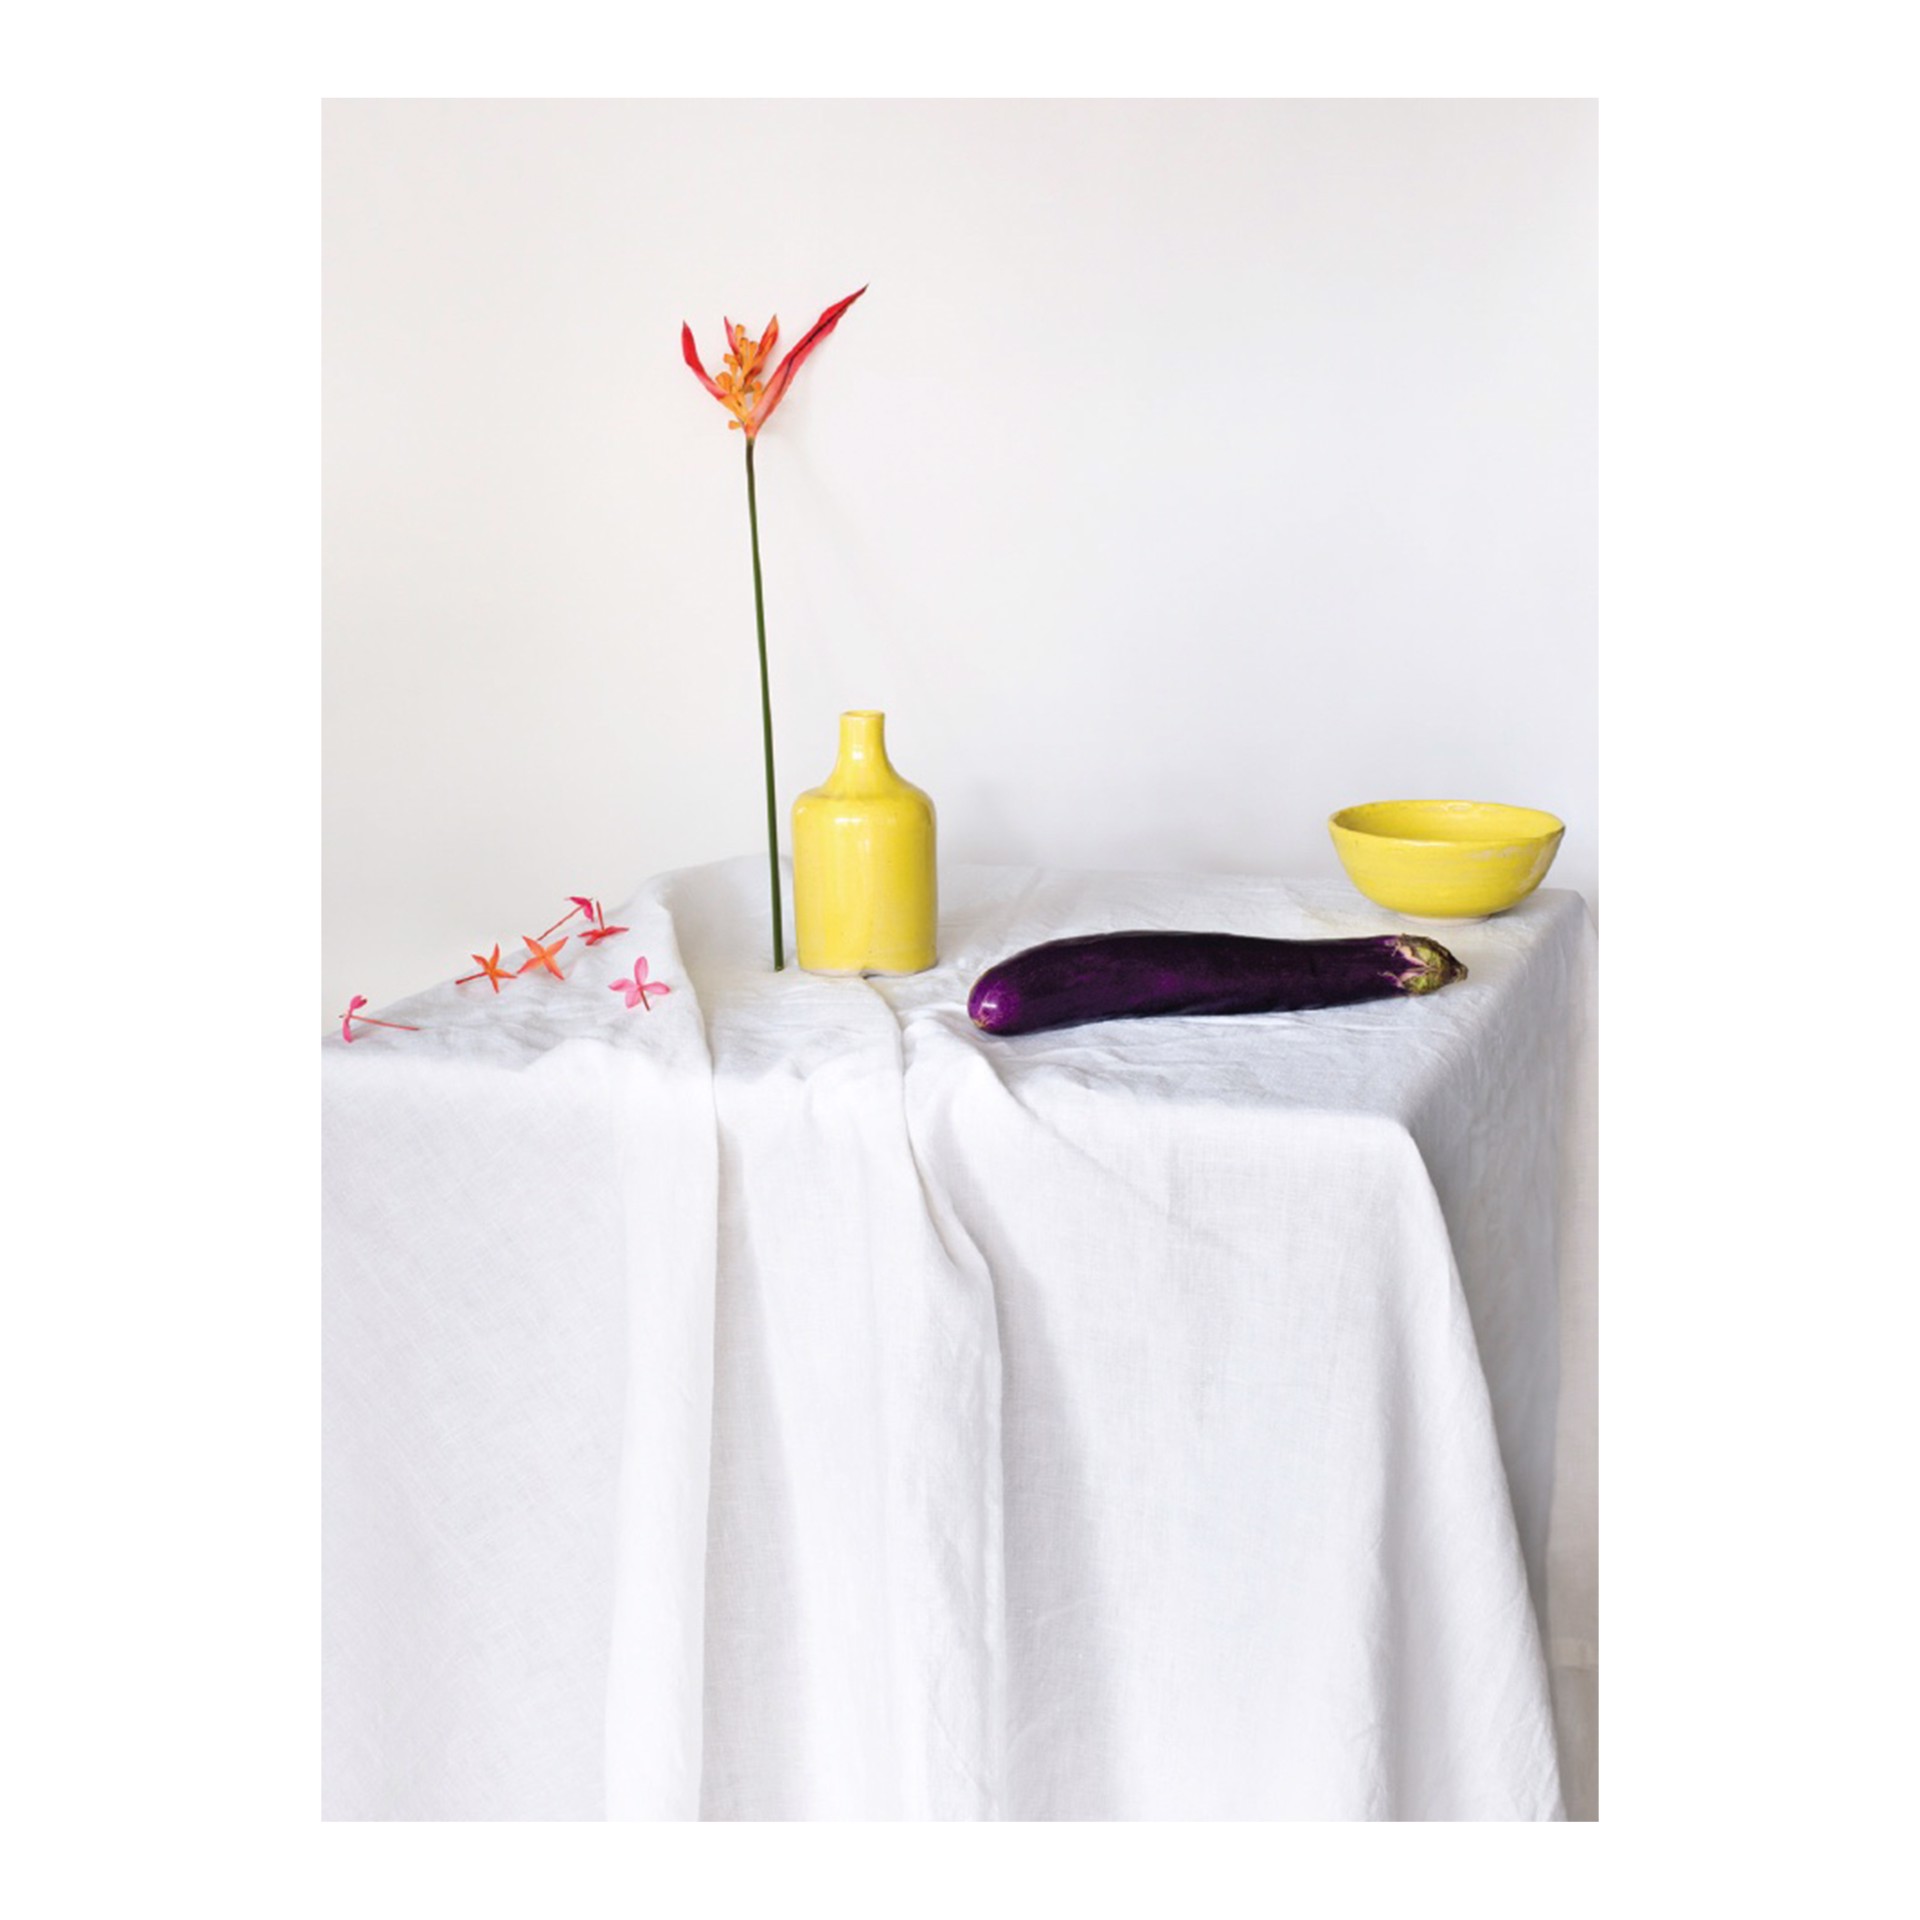 Still Life with Eggplant & Yellow Vessels by Gabriella Imperatori-Penn